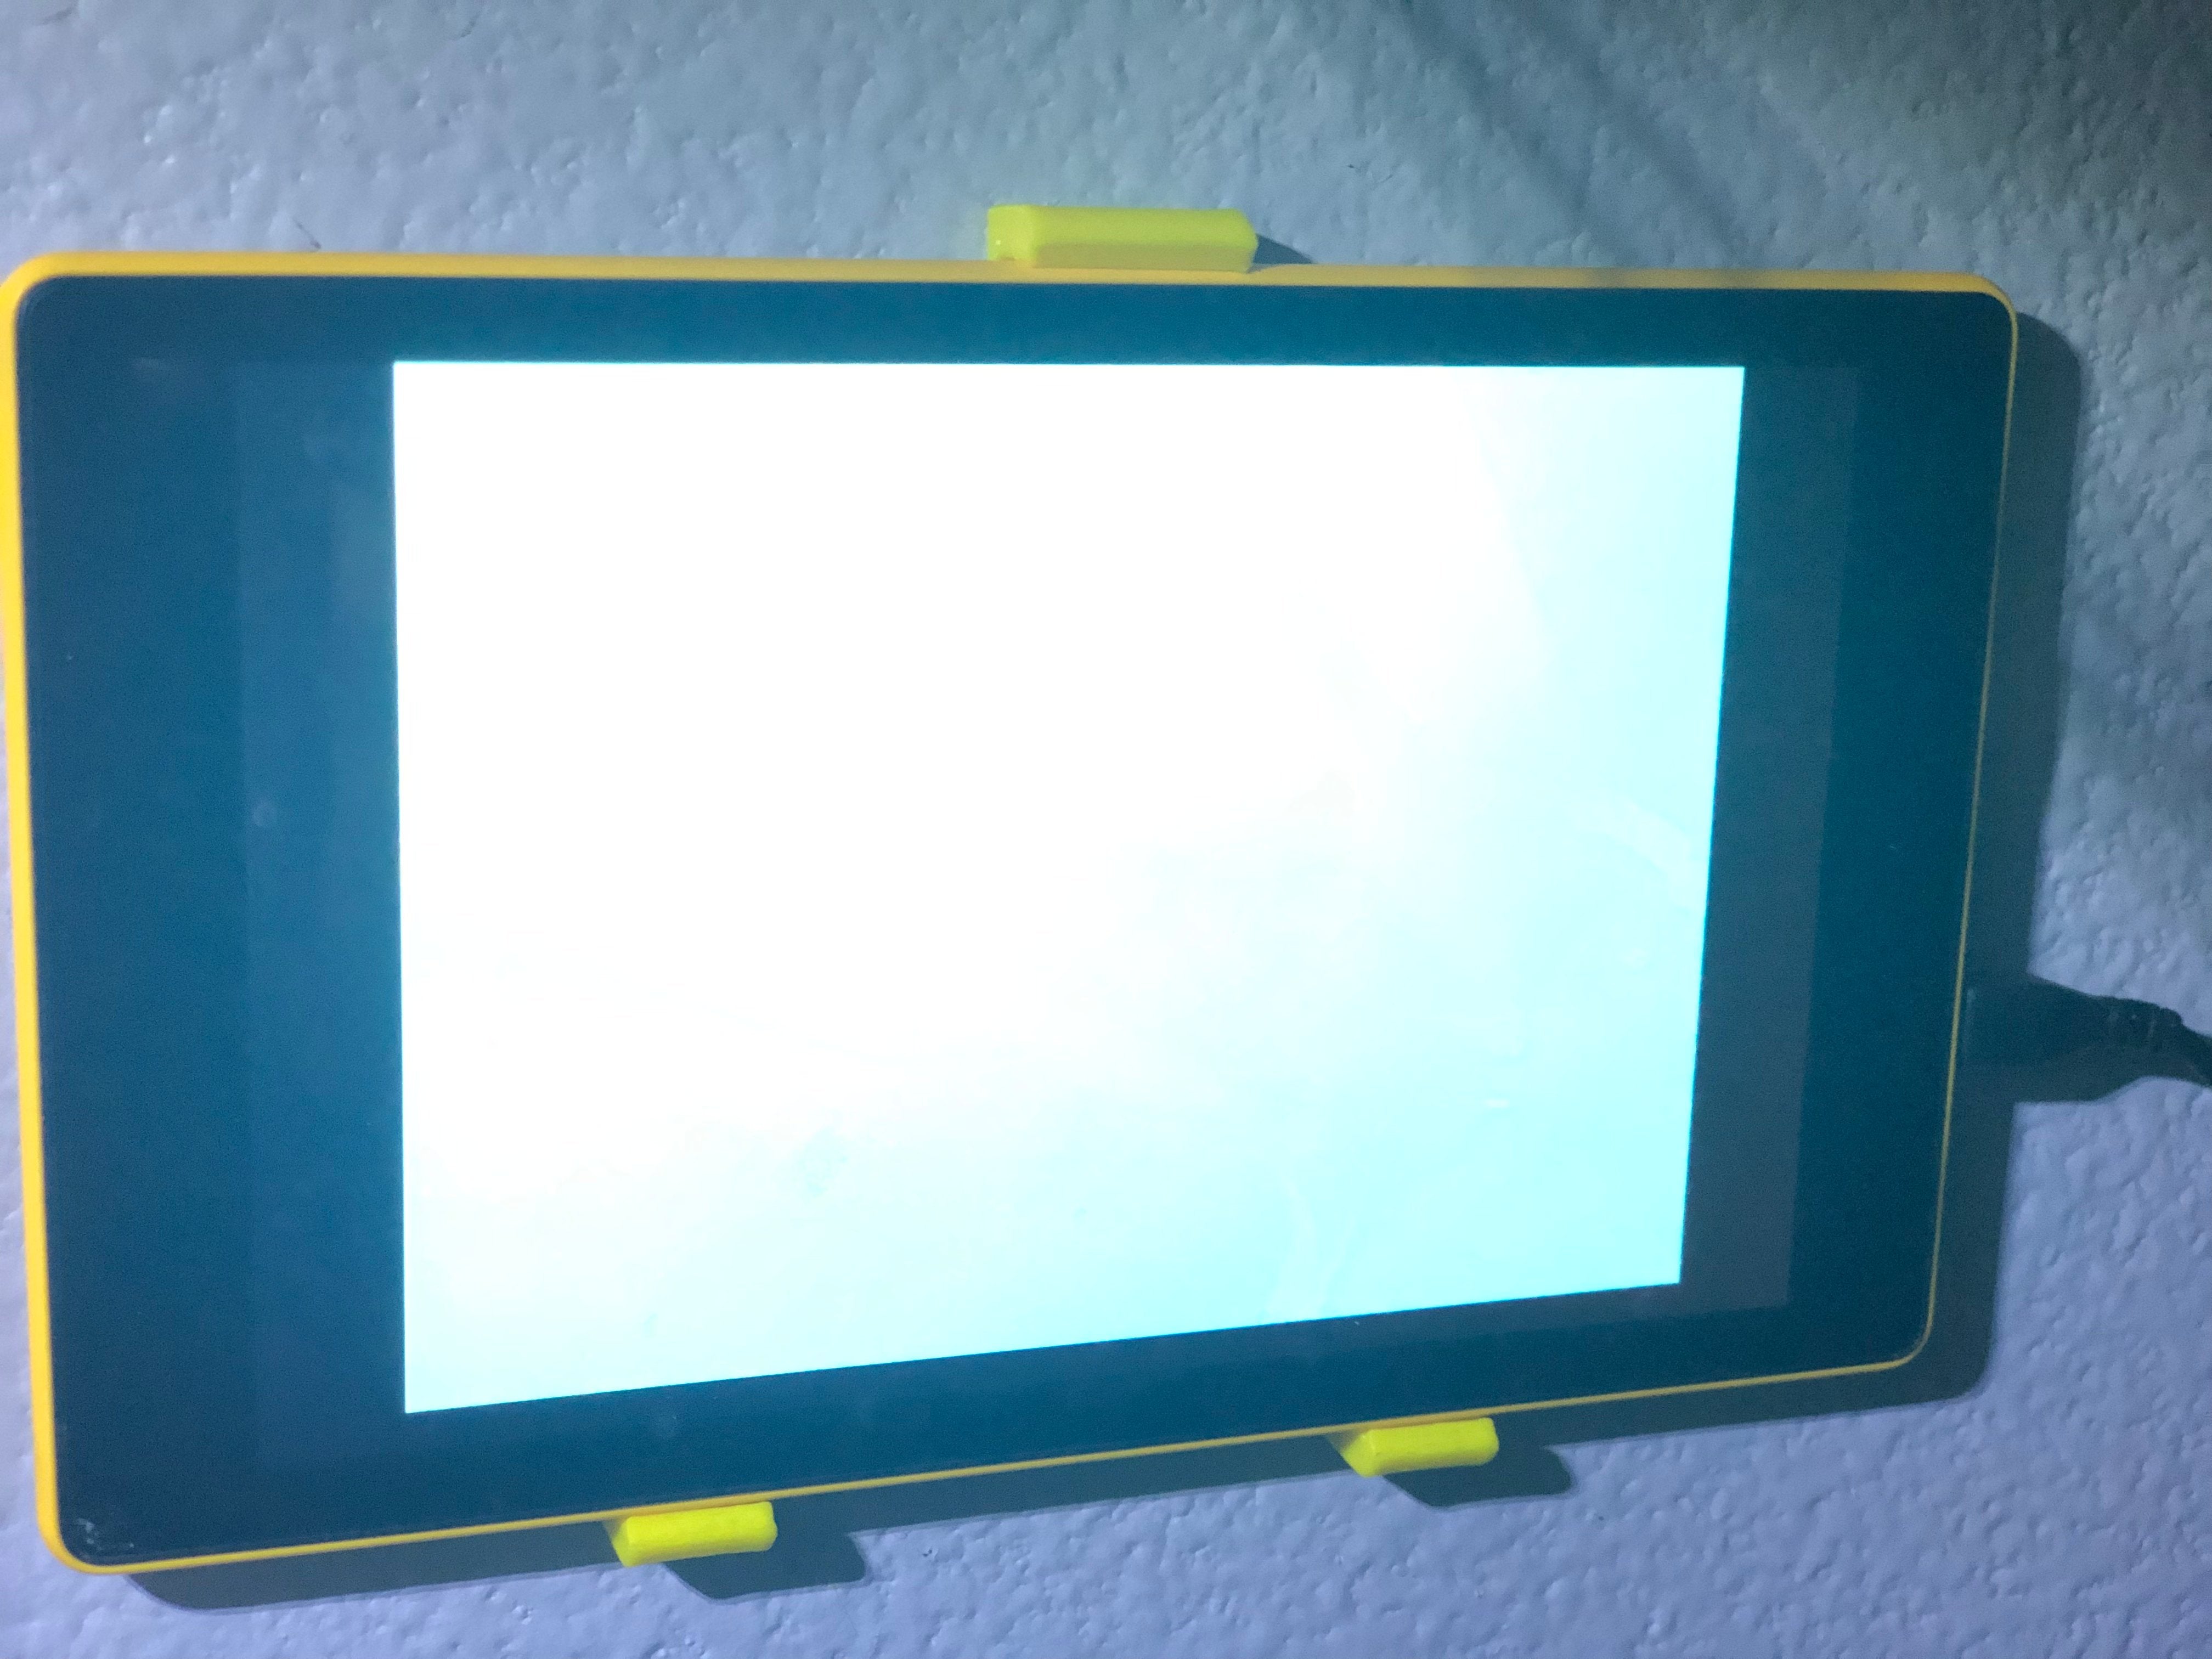 Seinäteline Fire HD 8 -tabletille